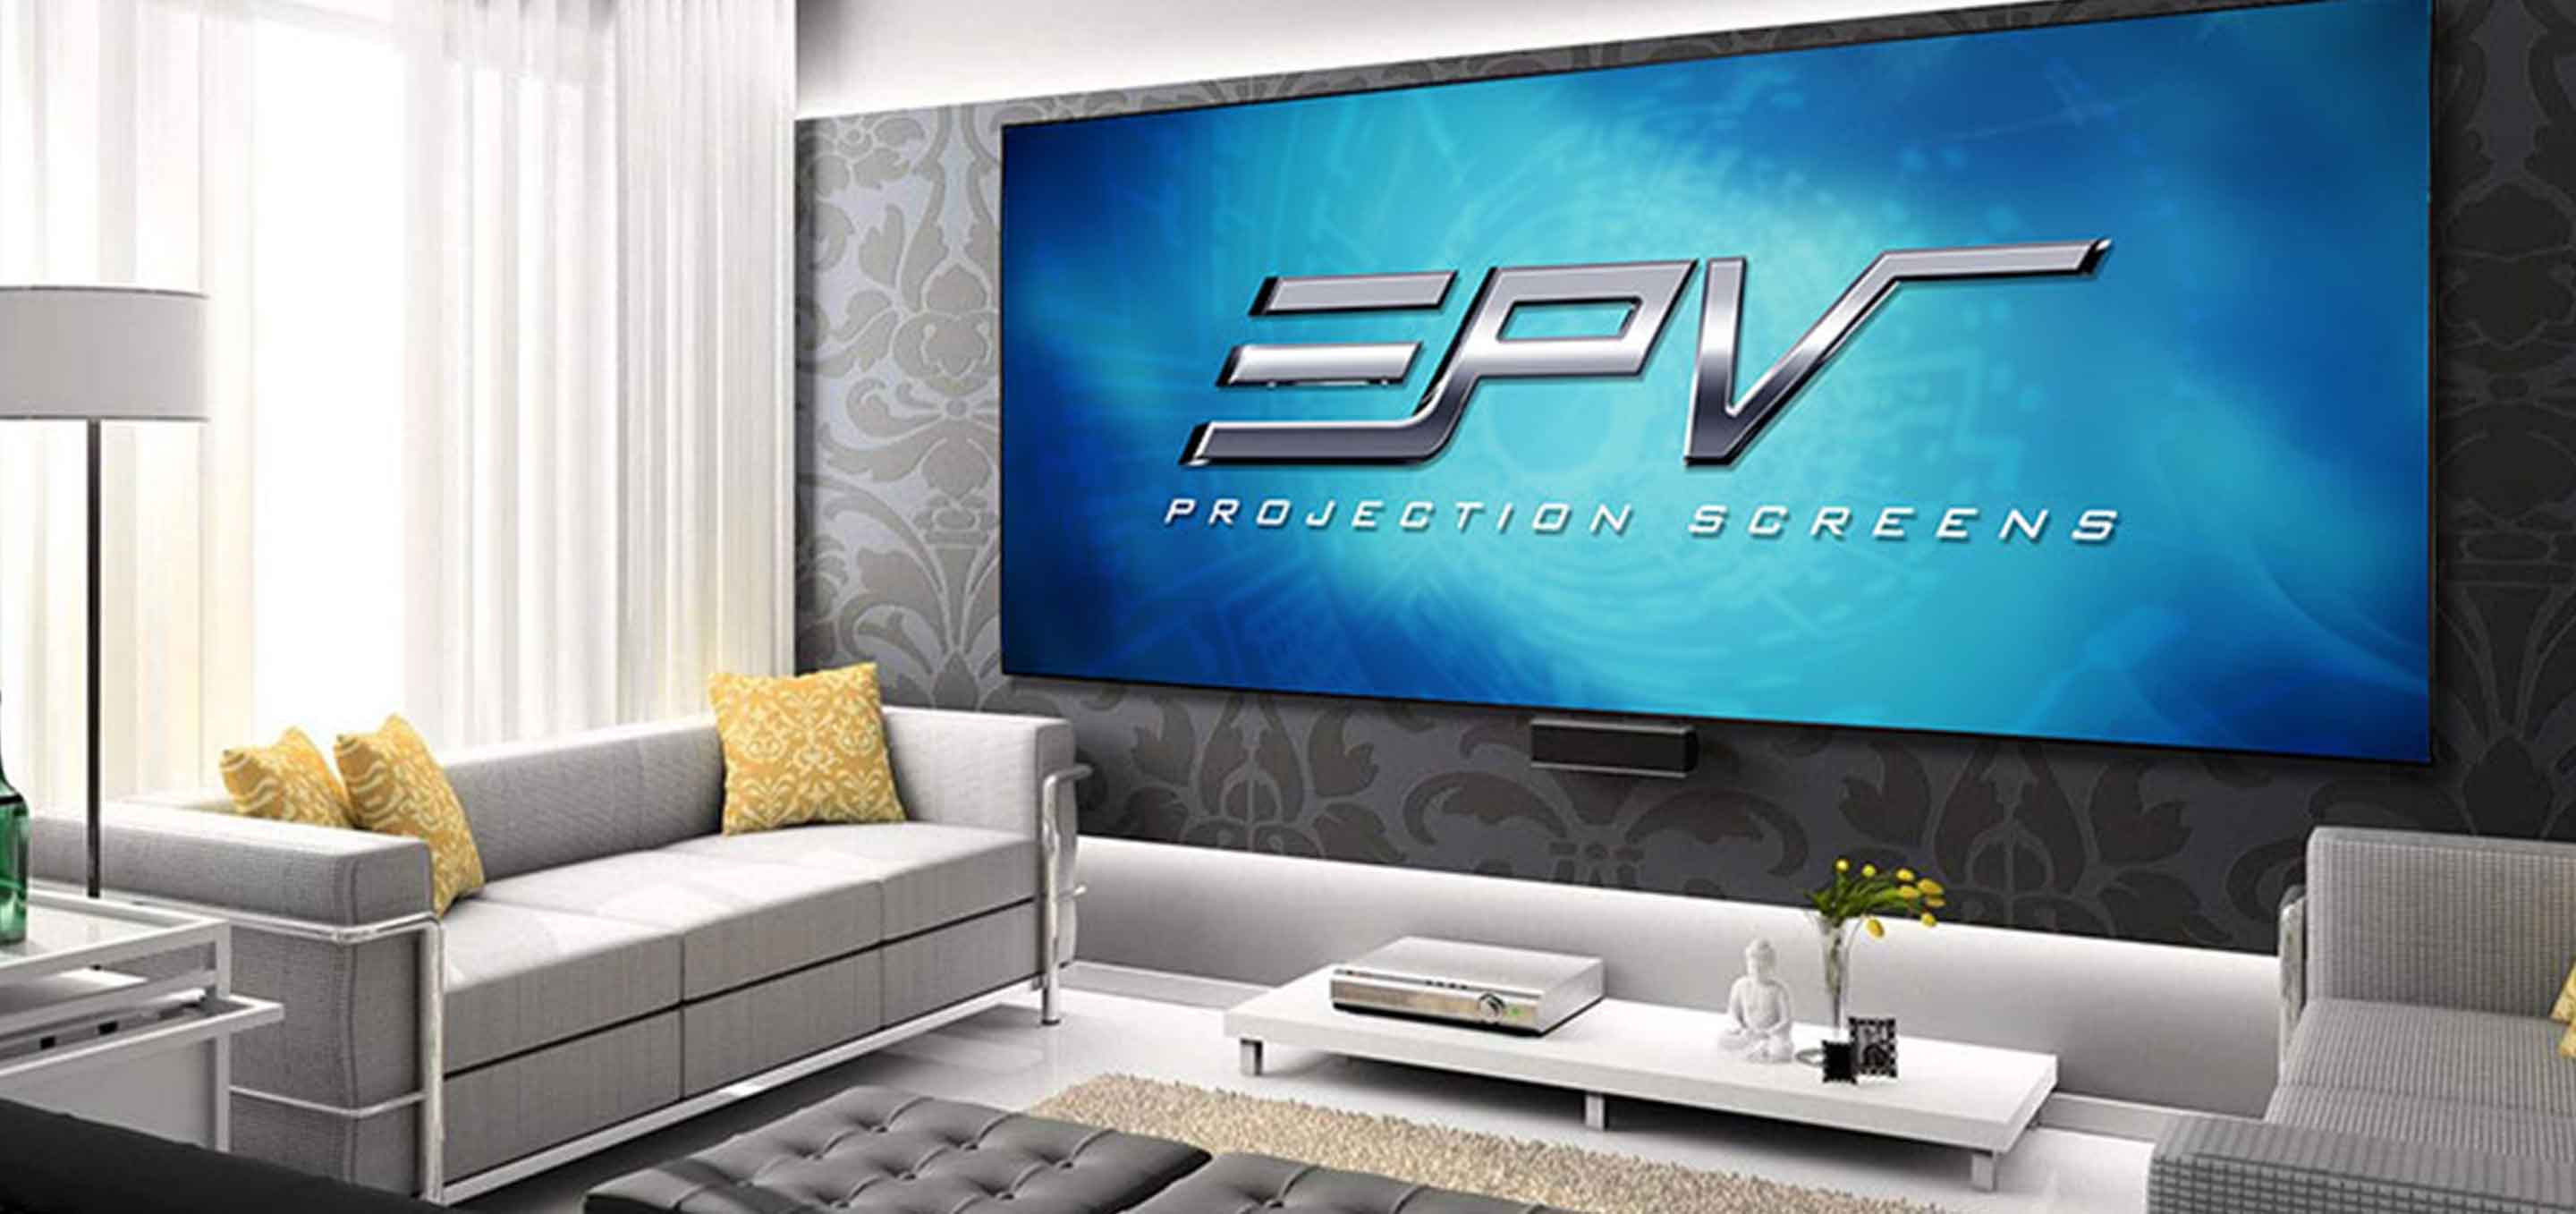 EPV Projector Screens